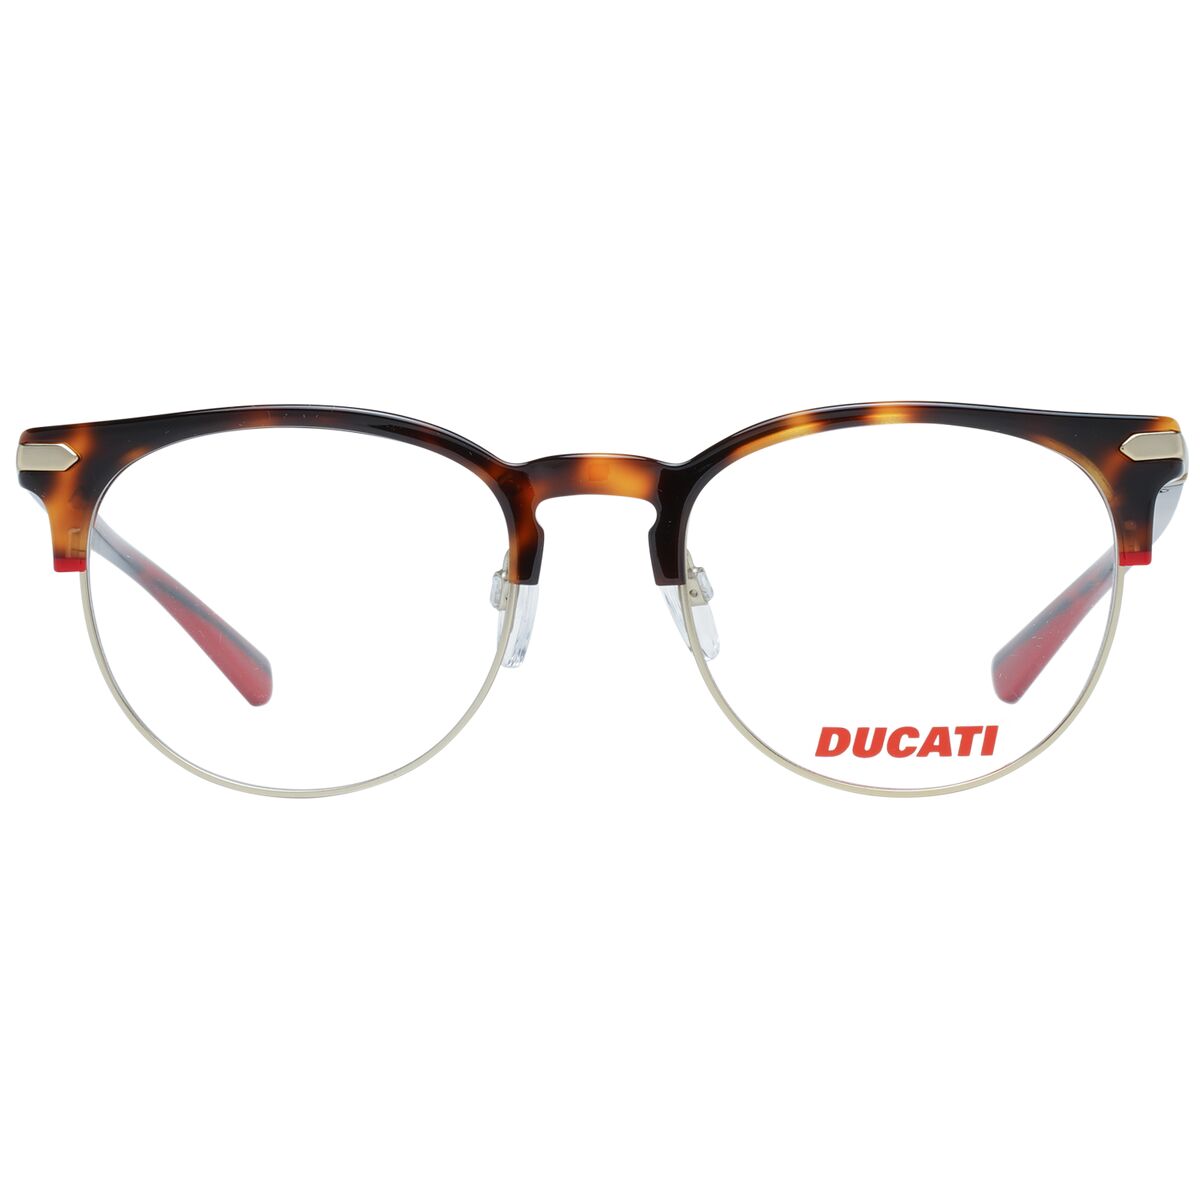 Kaufe Brillenfassung Ducati DA1010 51403 bei AWK Flagship um € 67.00